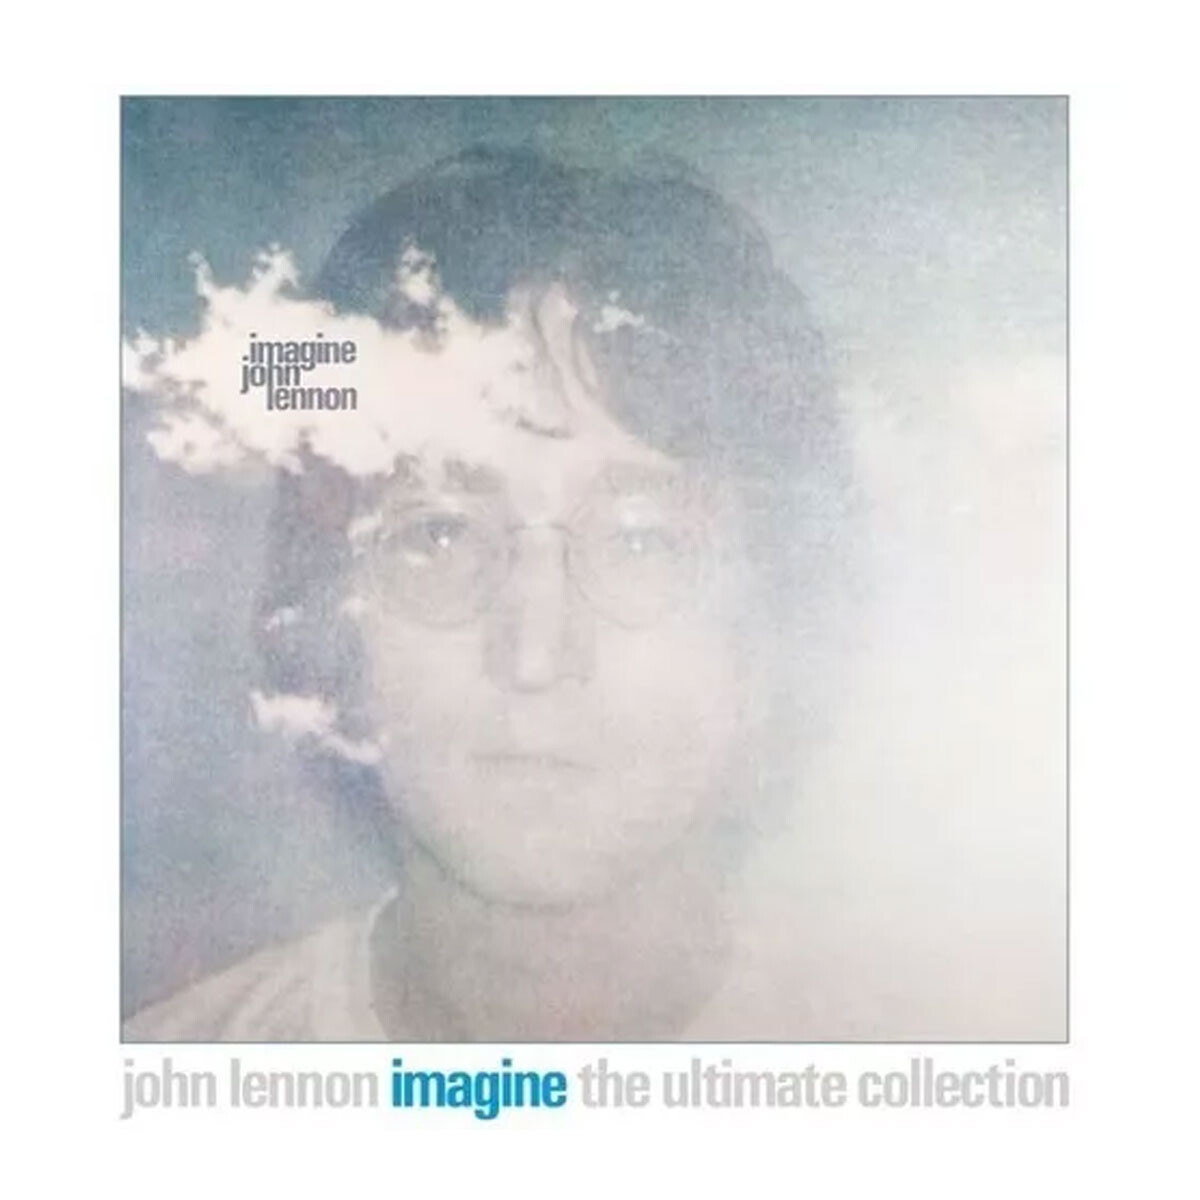 Lennon John - Imagine The Ultimate Collectio - Cd 